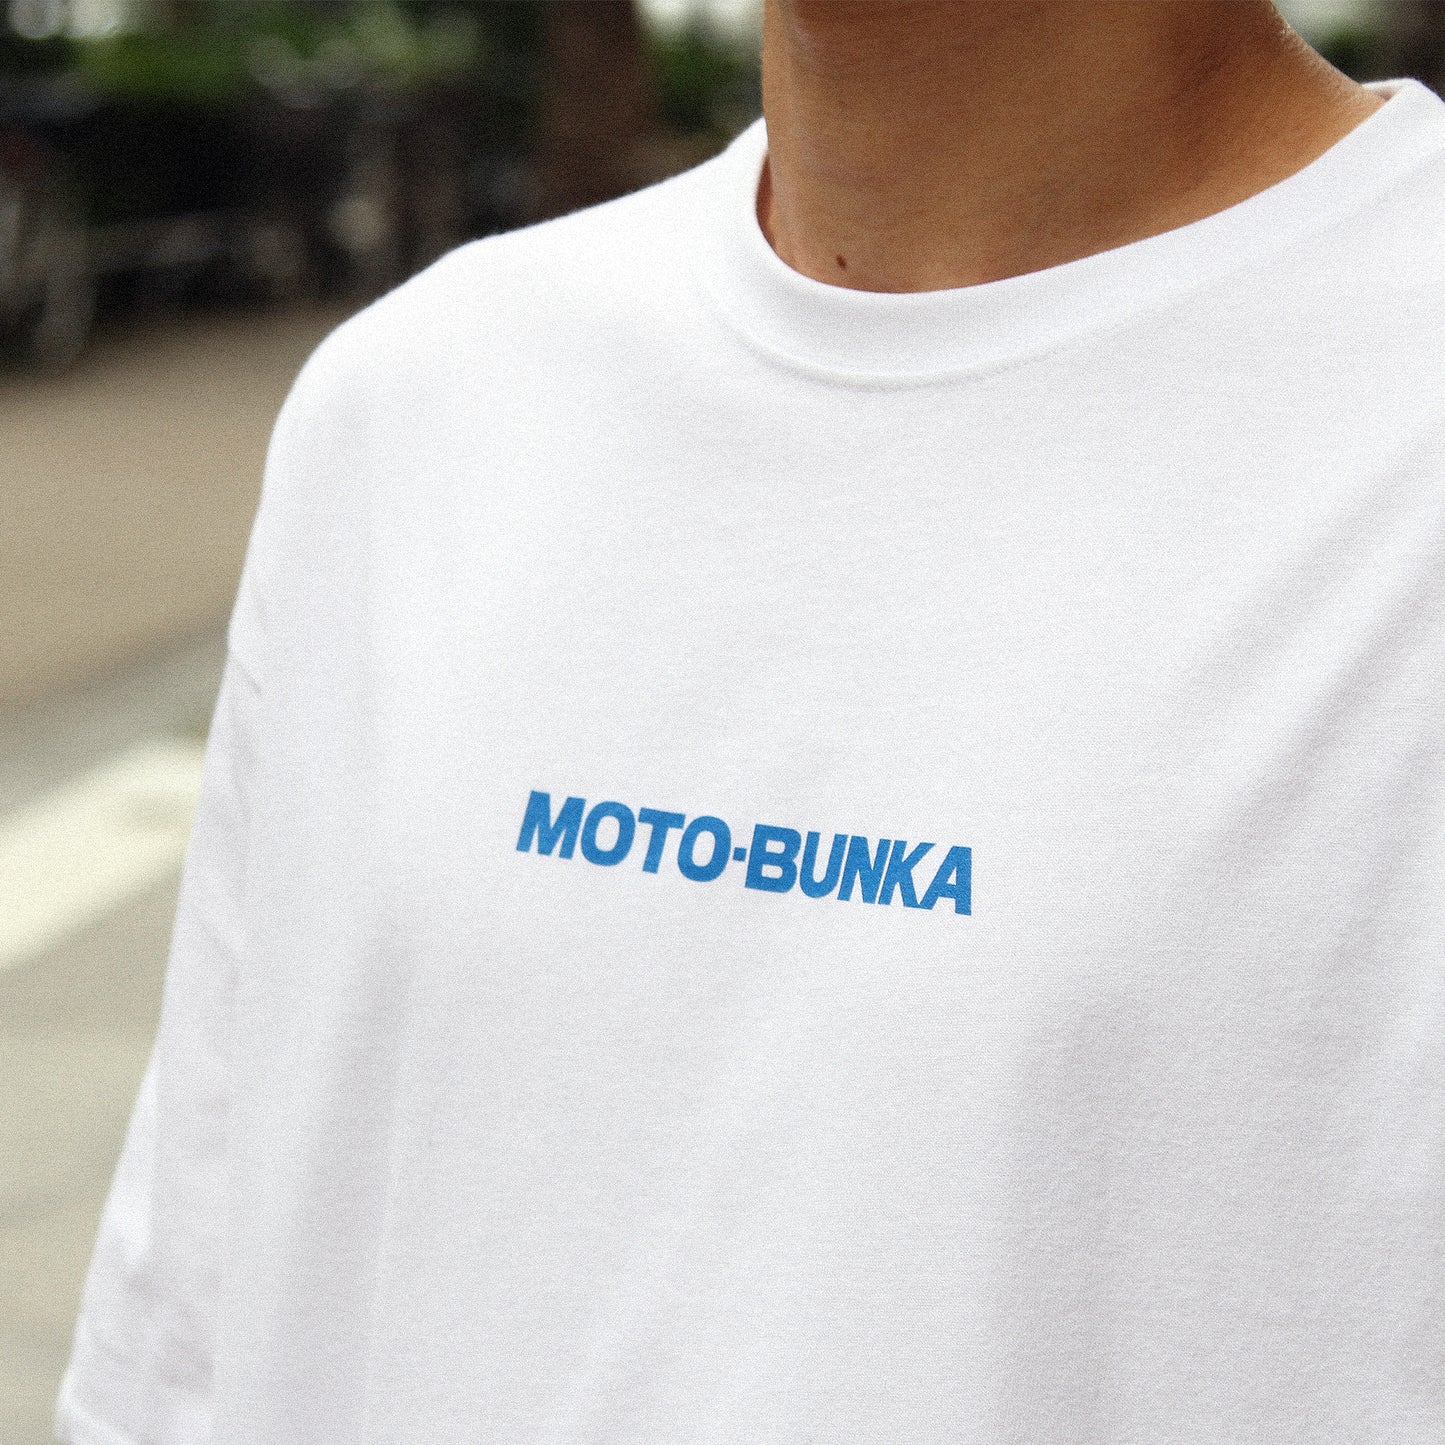 MOTO-BUNKA - JBM 23 T-Shirt/White-Blue